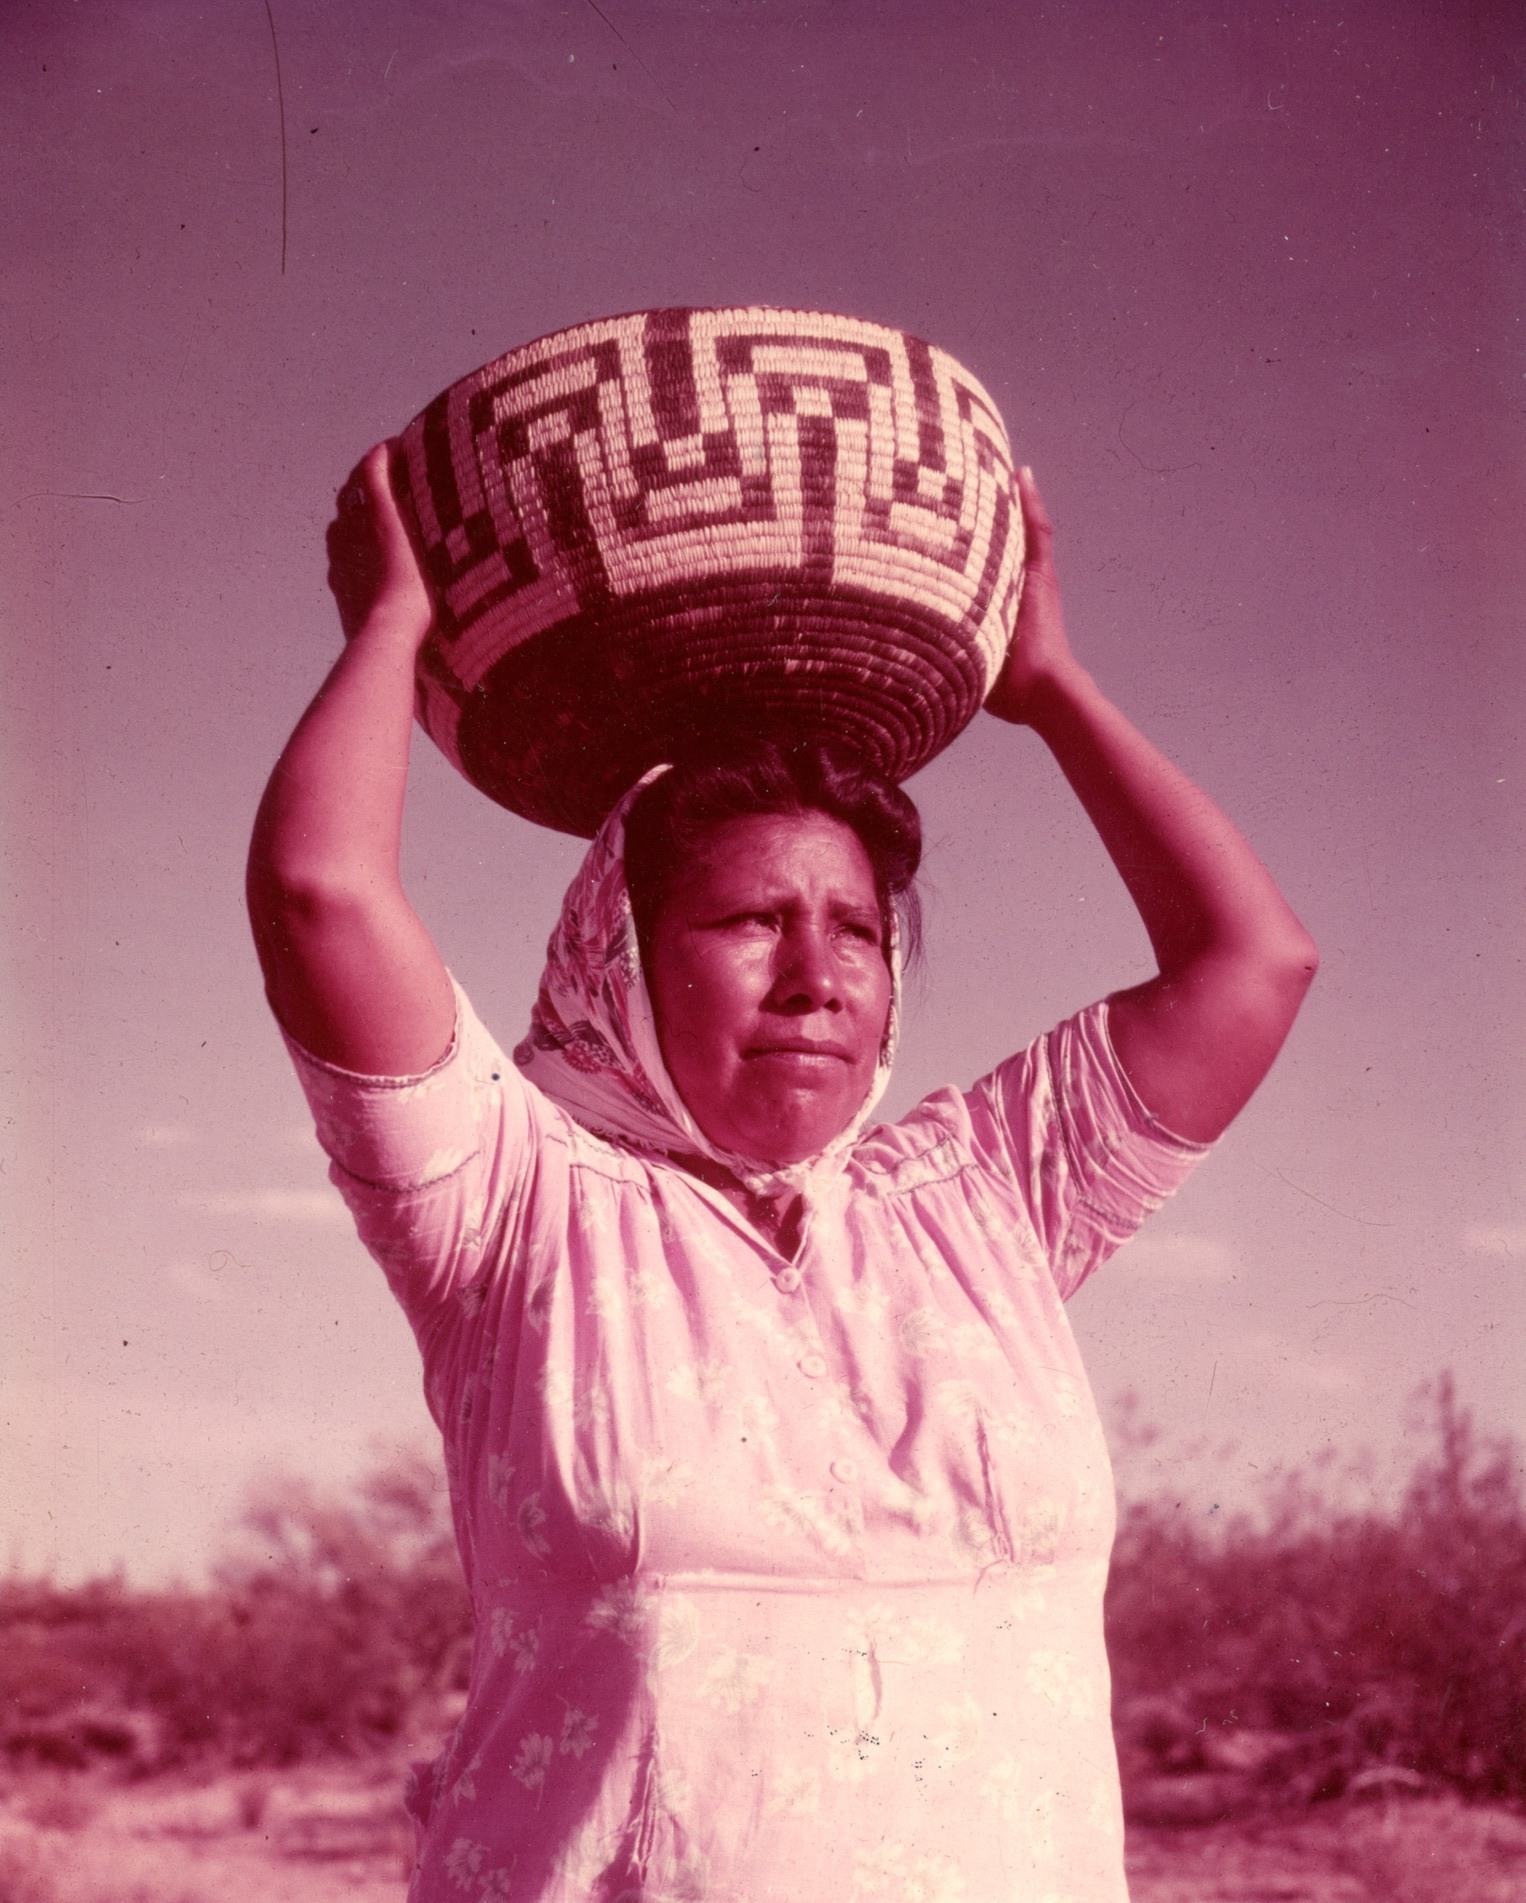 Tohono O'odham woman with a woven basket on her head.